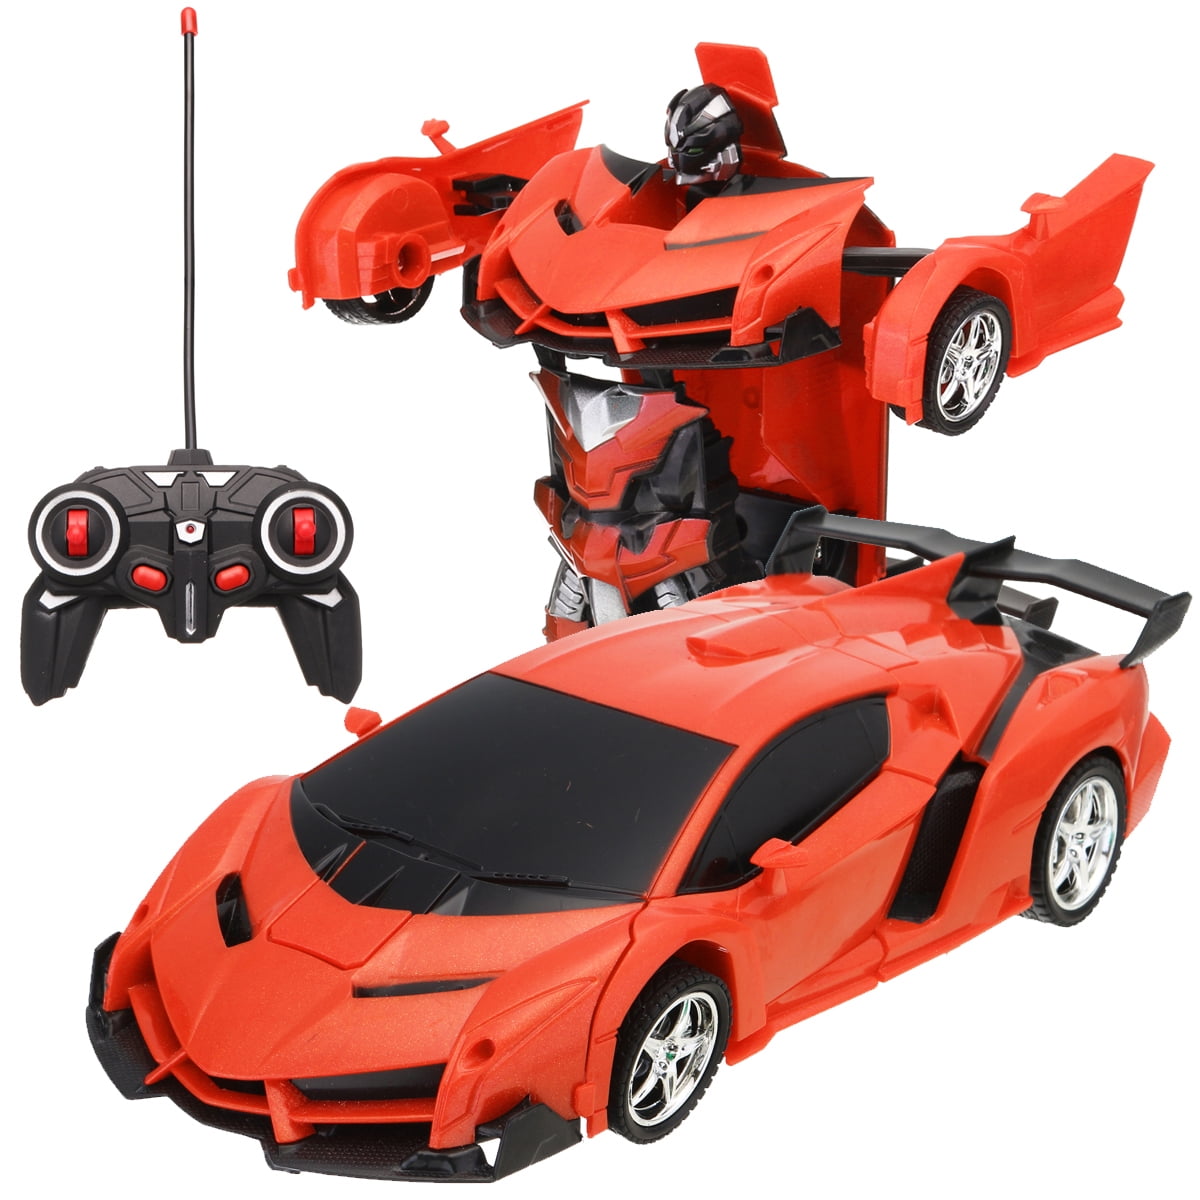 hobby-rc-model-vehicles-kits-kids-toy-transformer-rc-robot-car-remote